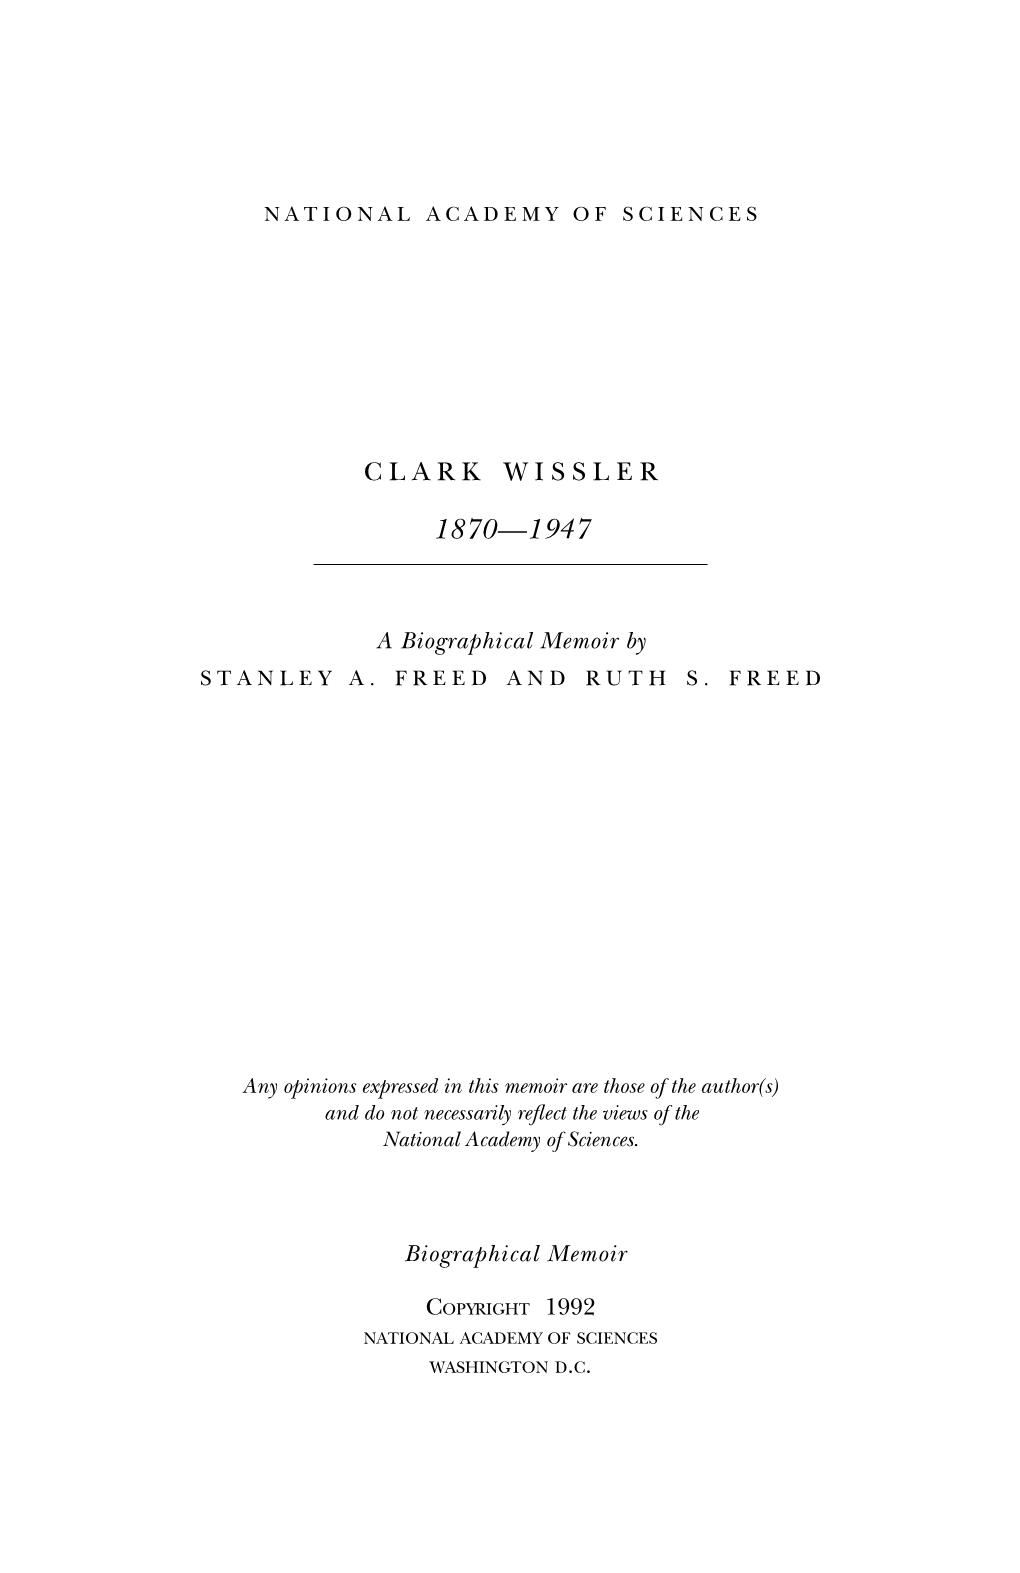 CLARK WISSLER September 18, 1870-August 25, 1947